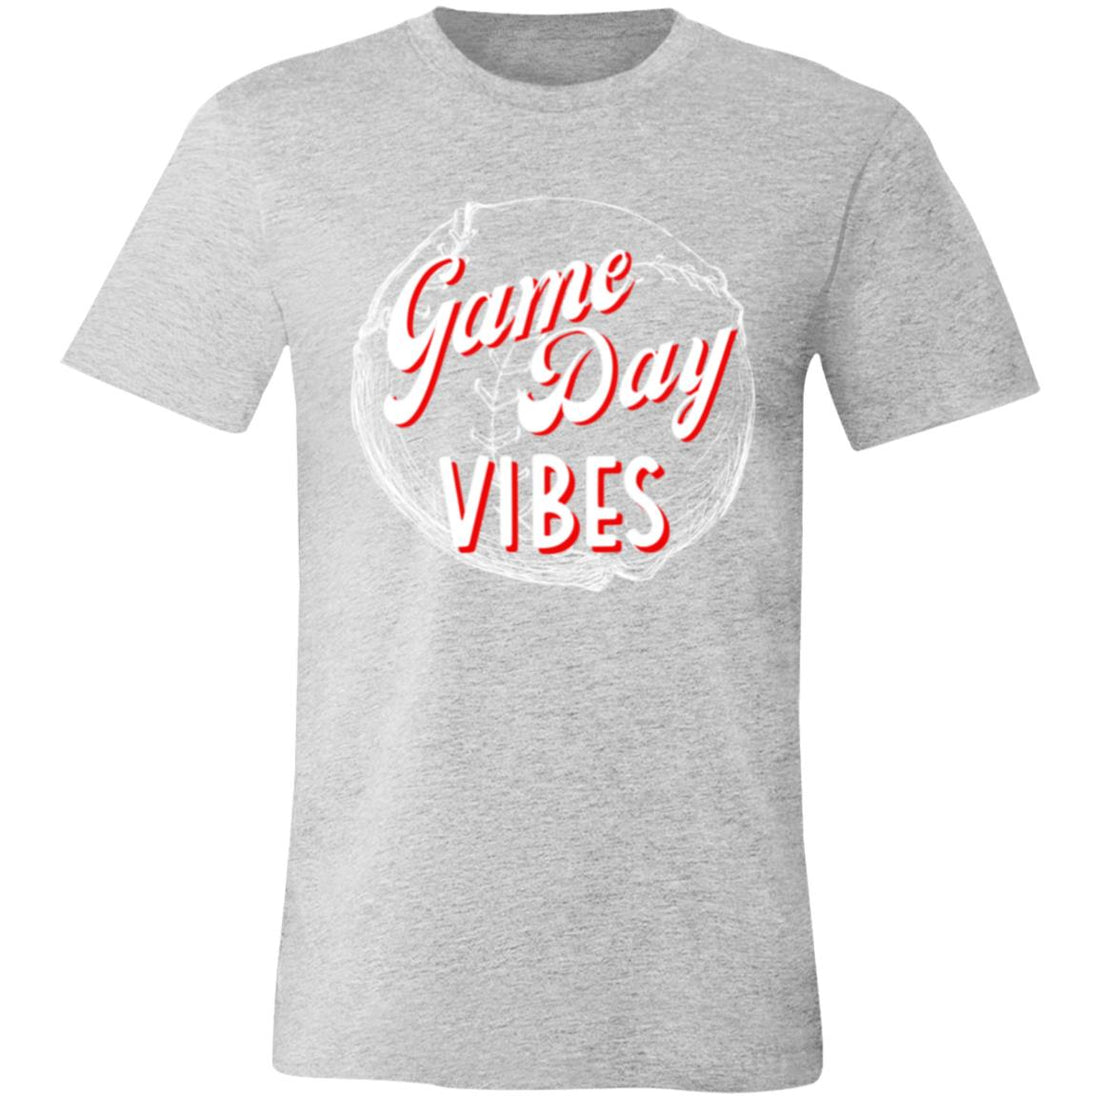 Game Day Vibes Baseball Short-Sleeve T-Shirt - T-Shirts - Positively Sassy - Game Day Vibes Baseball Short-Sleeve T-Shirt